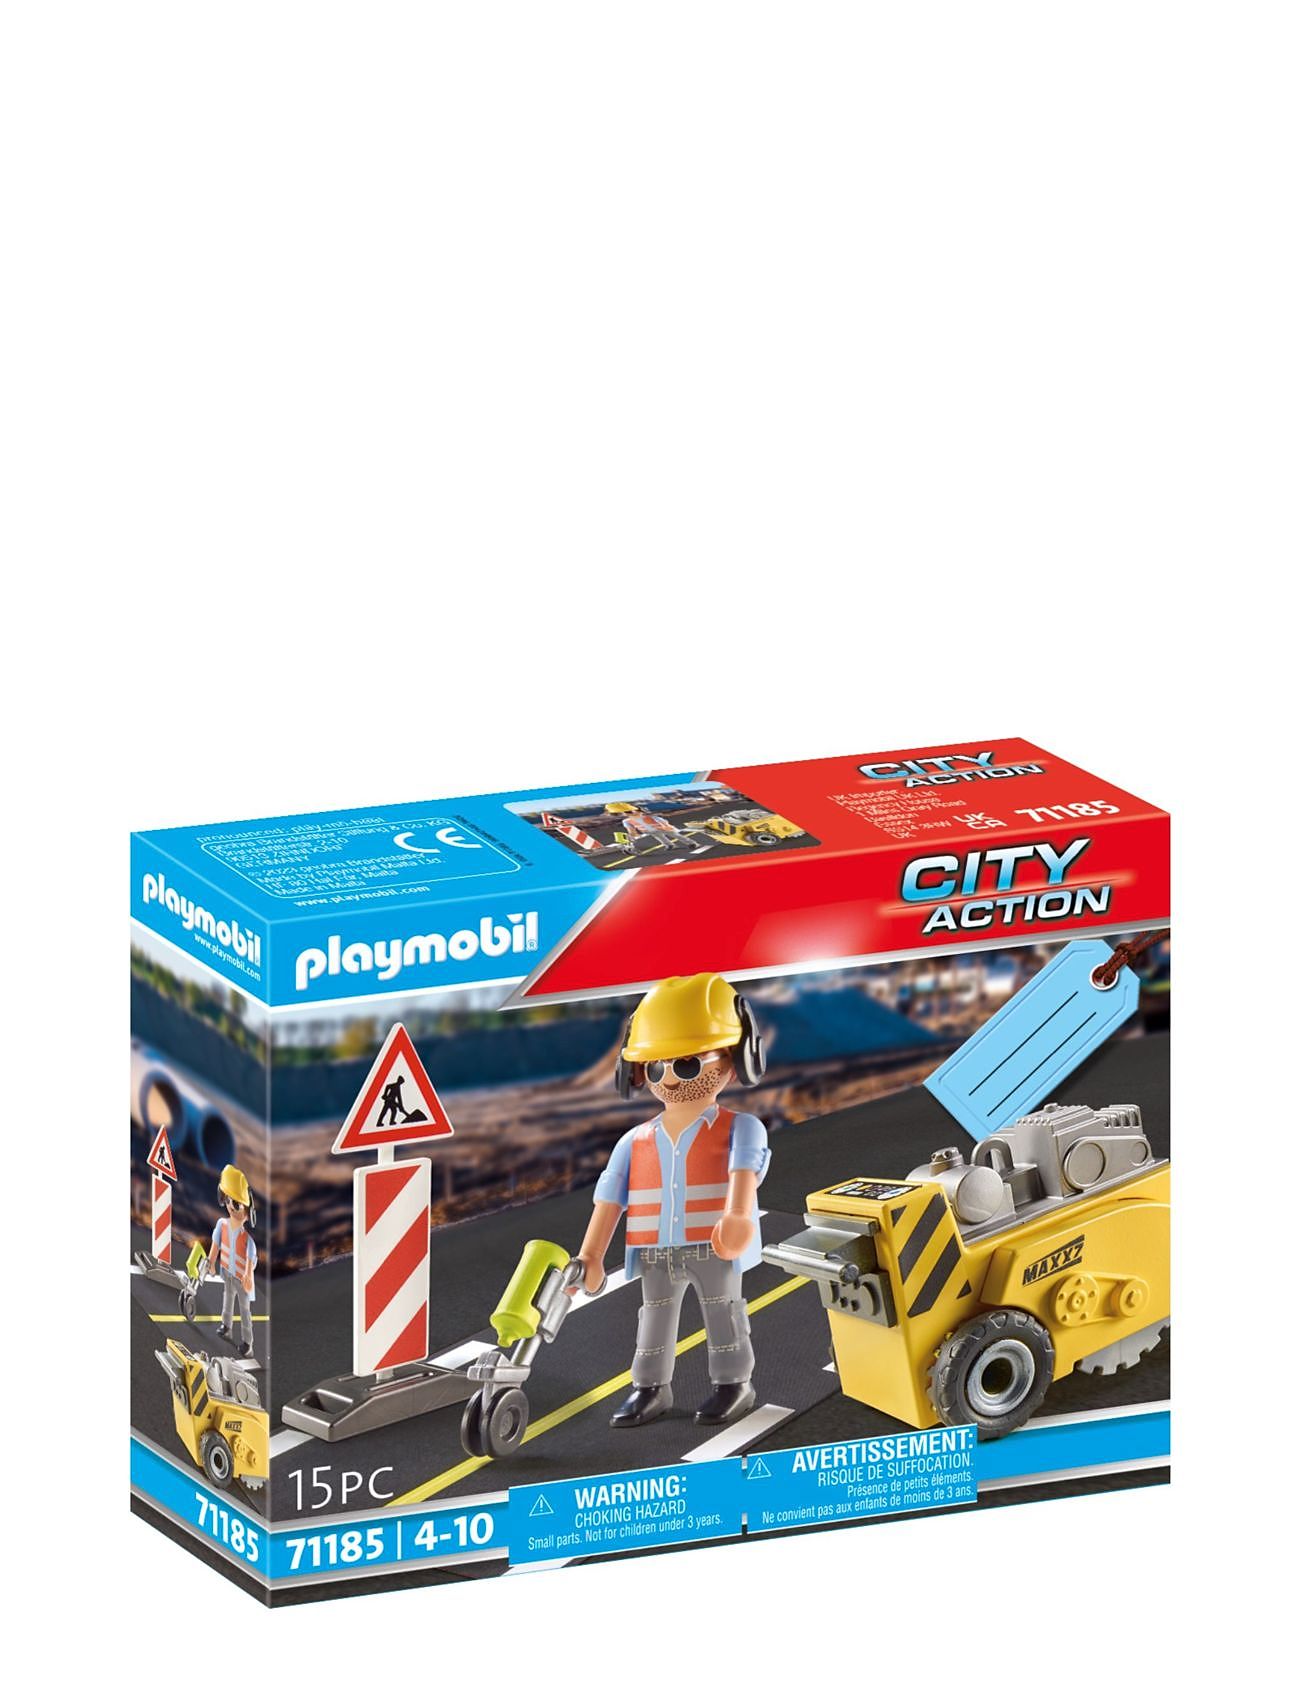 PLAYMOBIL "Playmobil Gift Sets Byggearbejder Med Kantfræser - 71185 Toys Playmobil City Action Multi/patterned PLAYMOBIL"